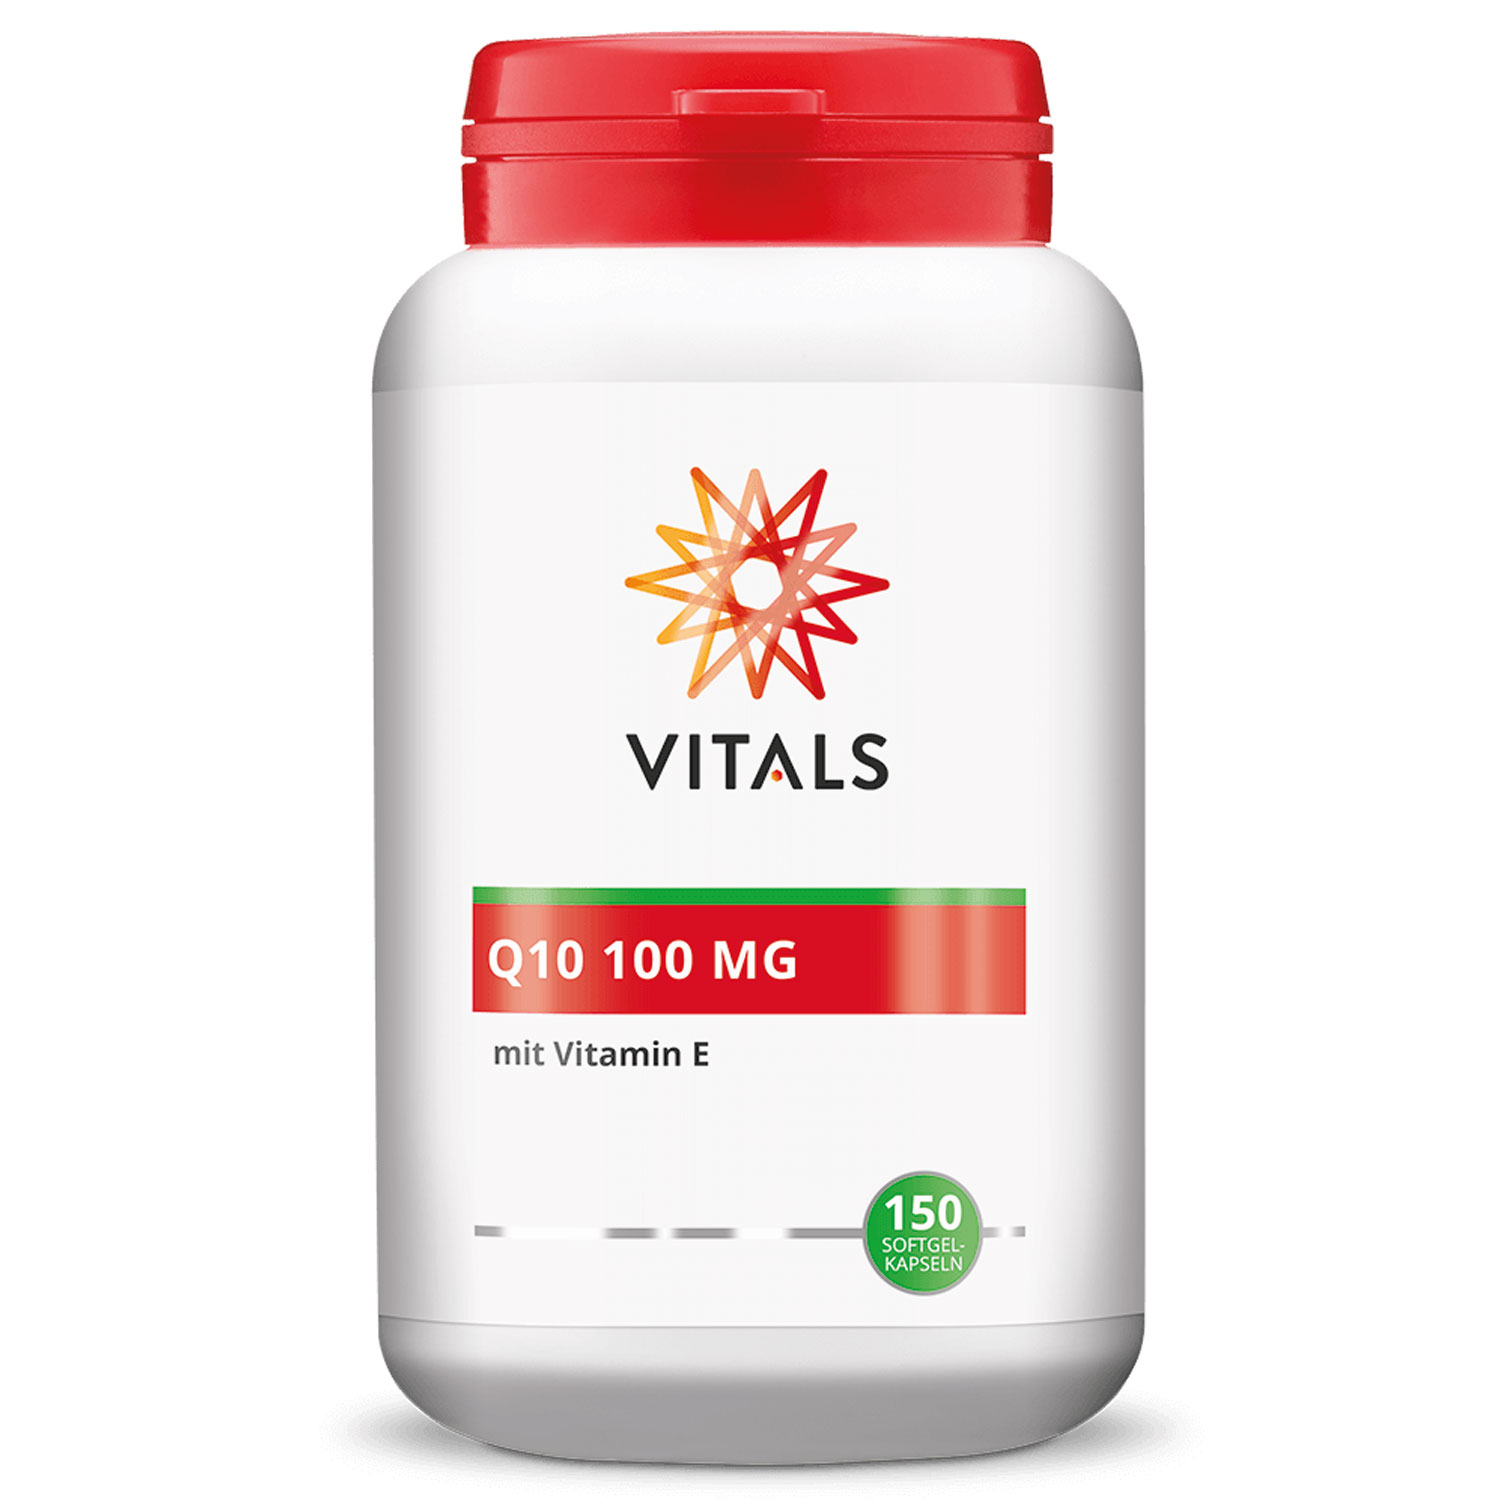 Q10 100 mg von Vitals - 150 Softgel-Kapseln